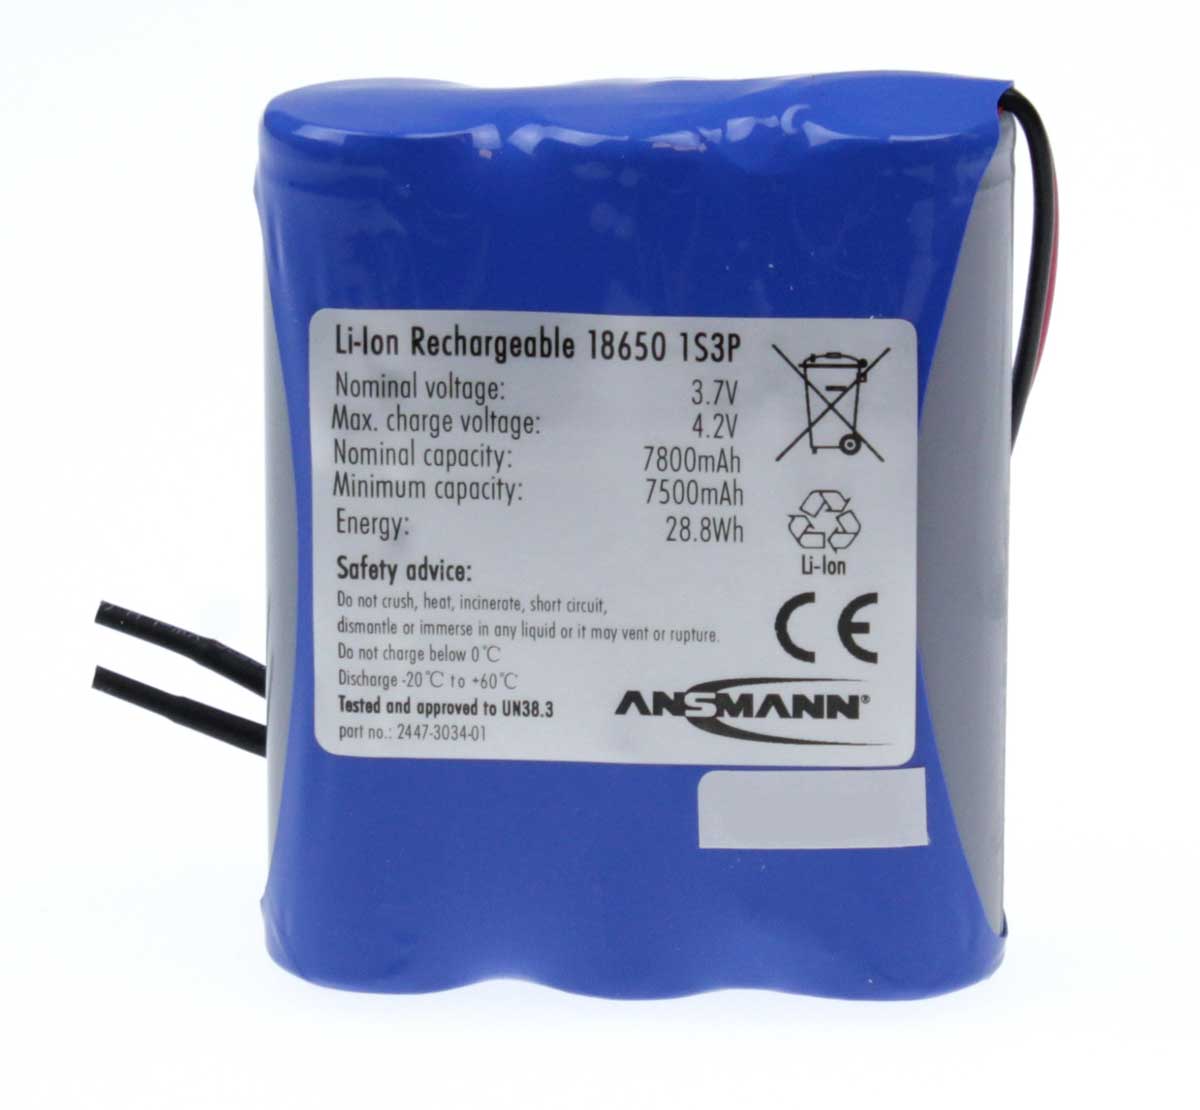 Ansmann Industrial 1S3P 3.7V 7800mAh Rechargeable Li-ion Battery Pack